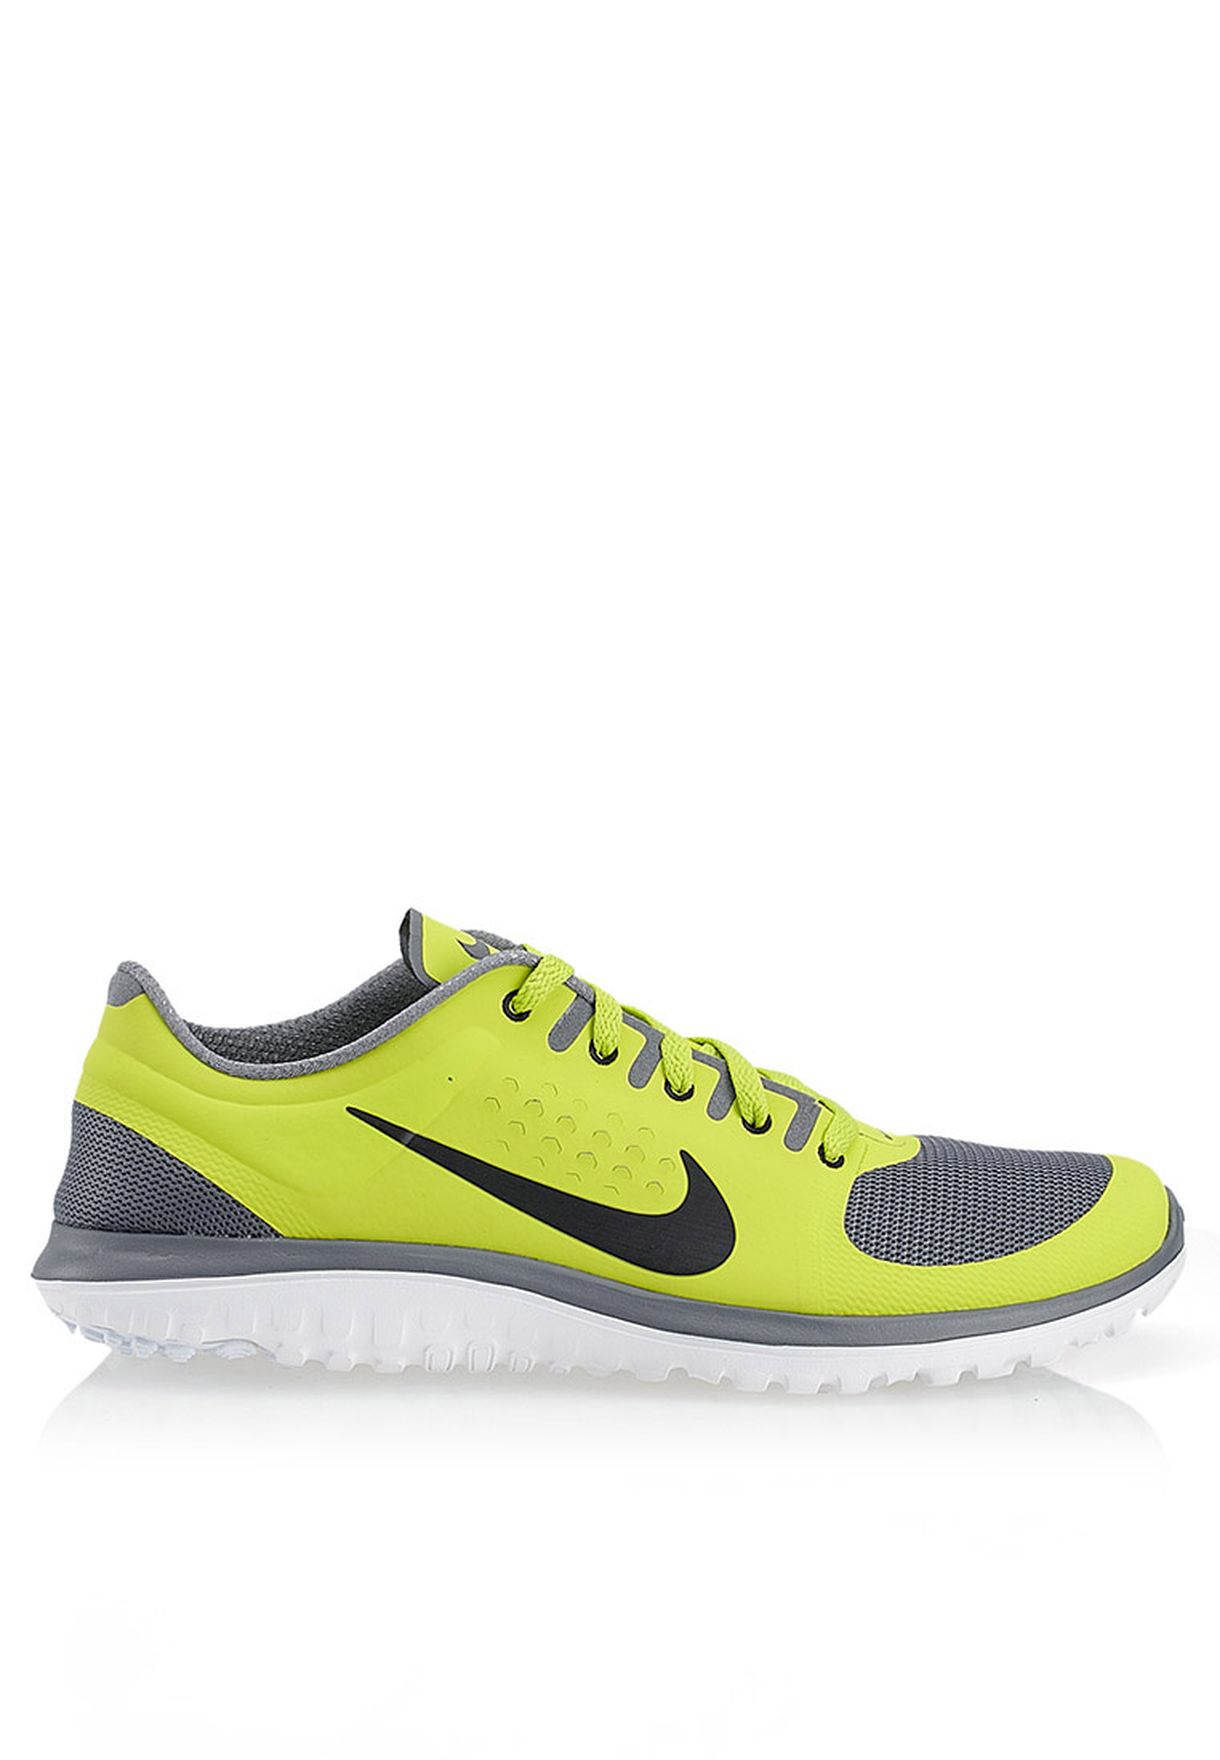 Buy yellow Nike FS Lite Run for Men MENA, Worldwide